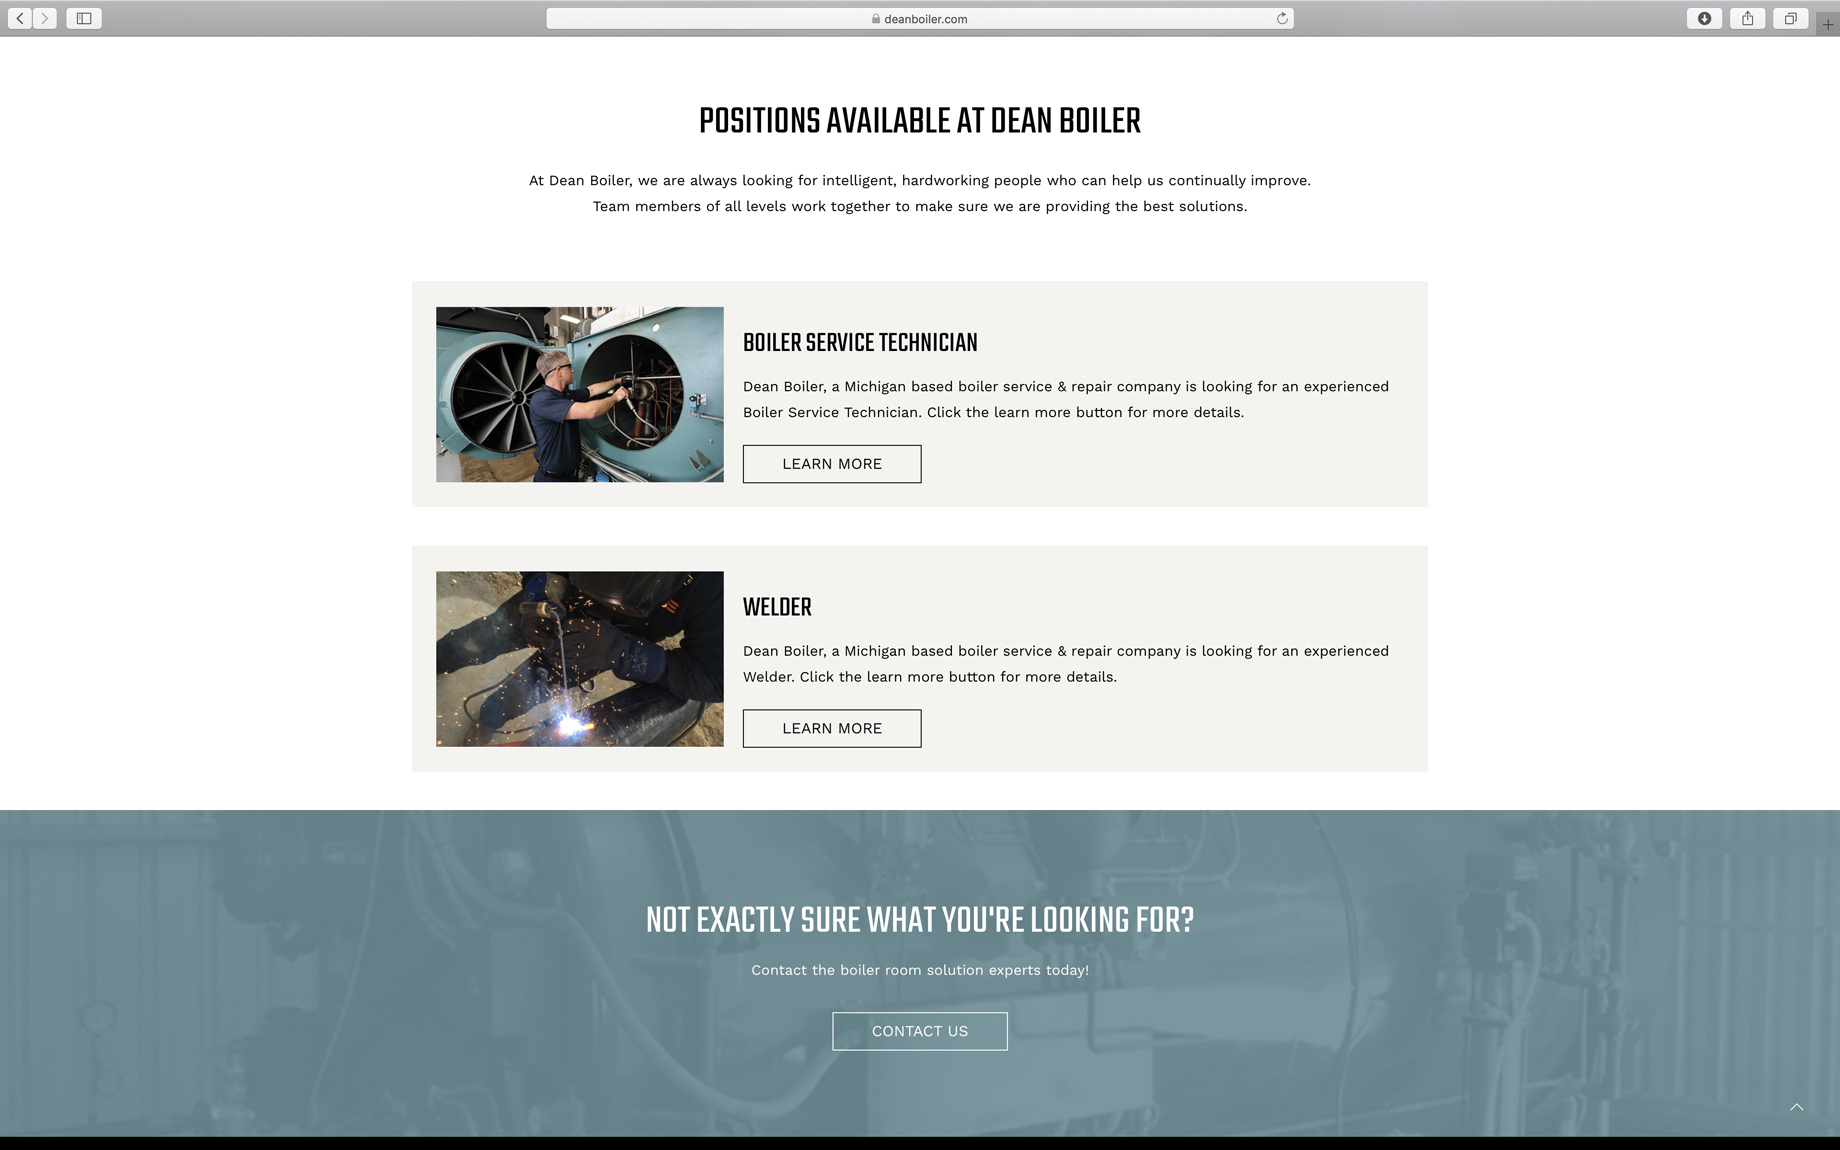 online job application page on dean boiler website in Michigan